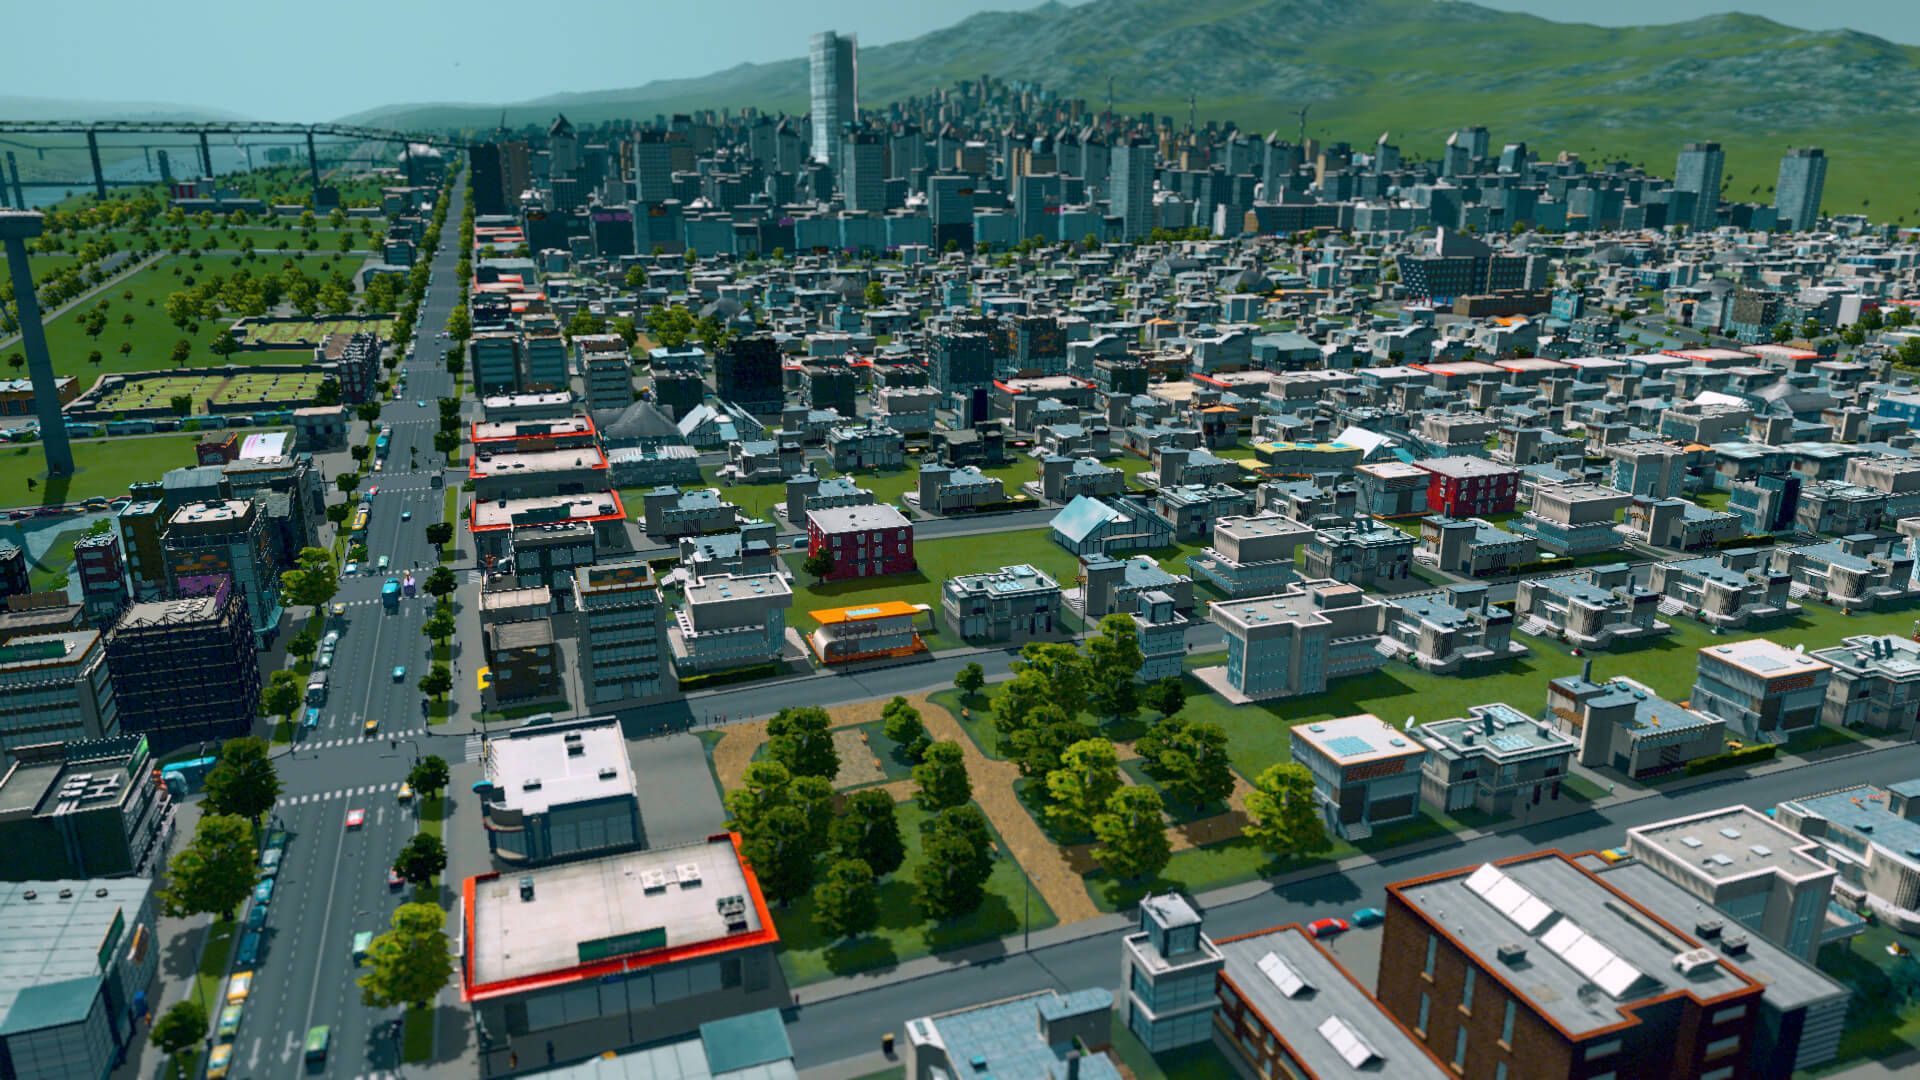 Cities Skylines sauvegarde l'emplacement du jeu